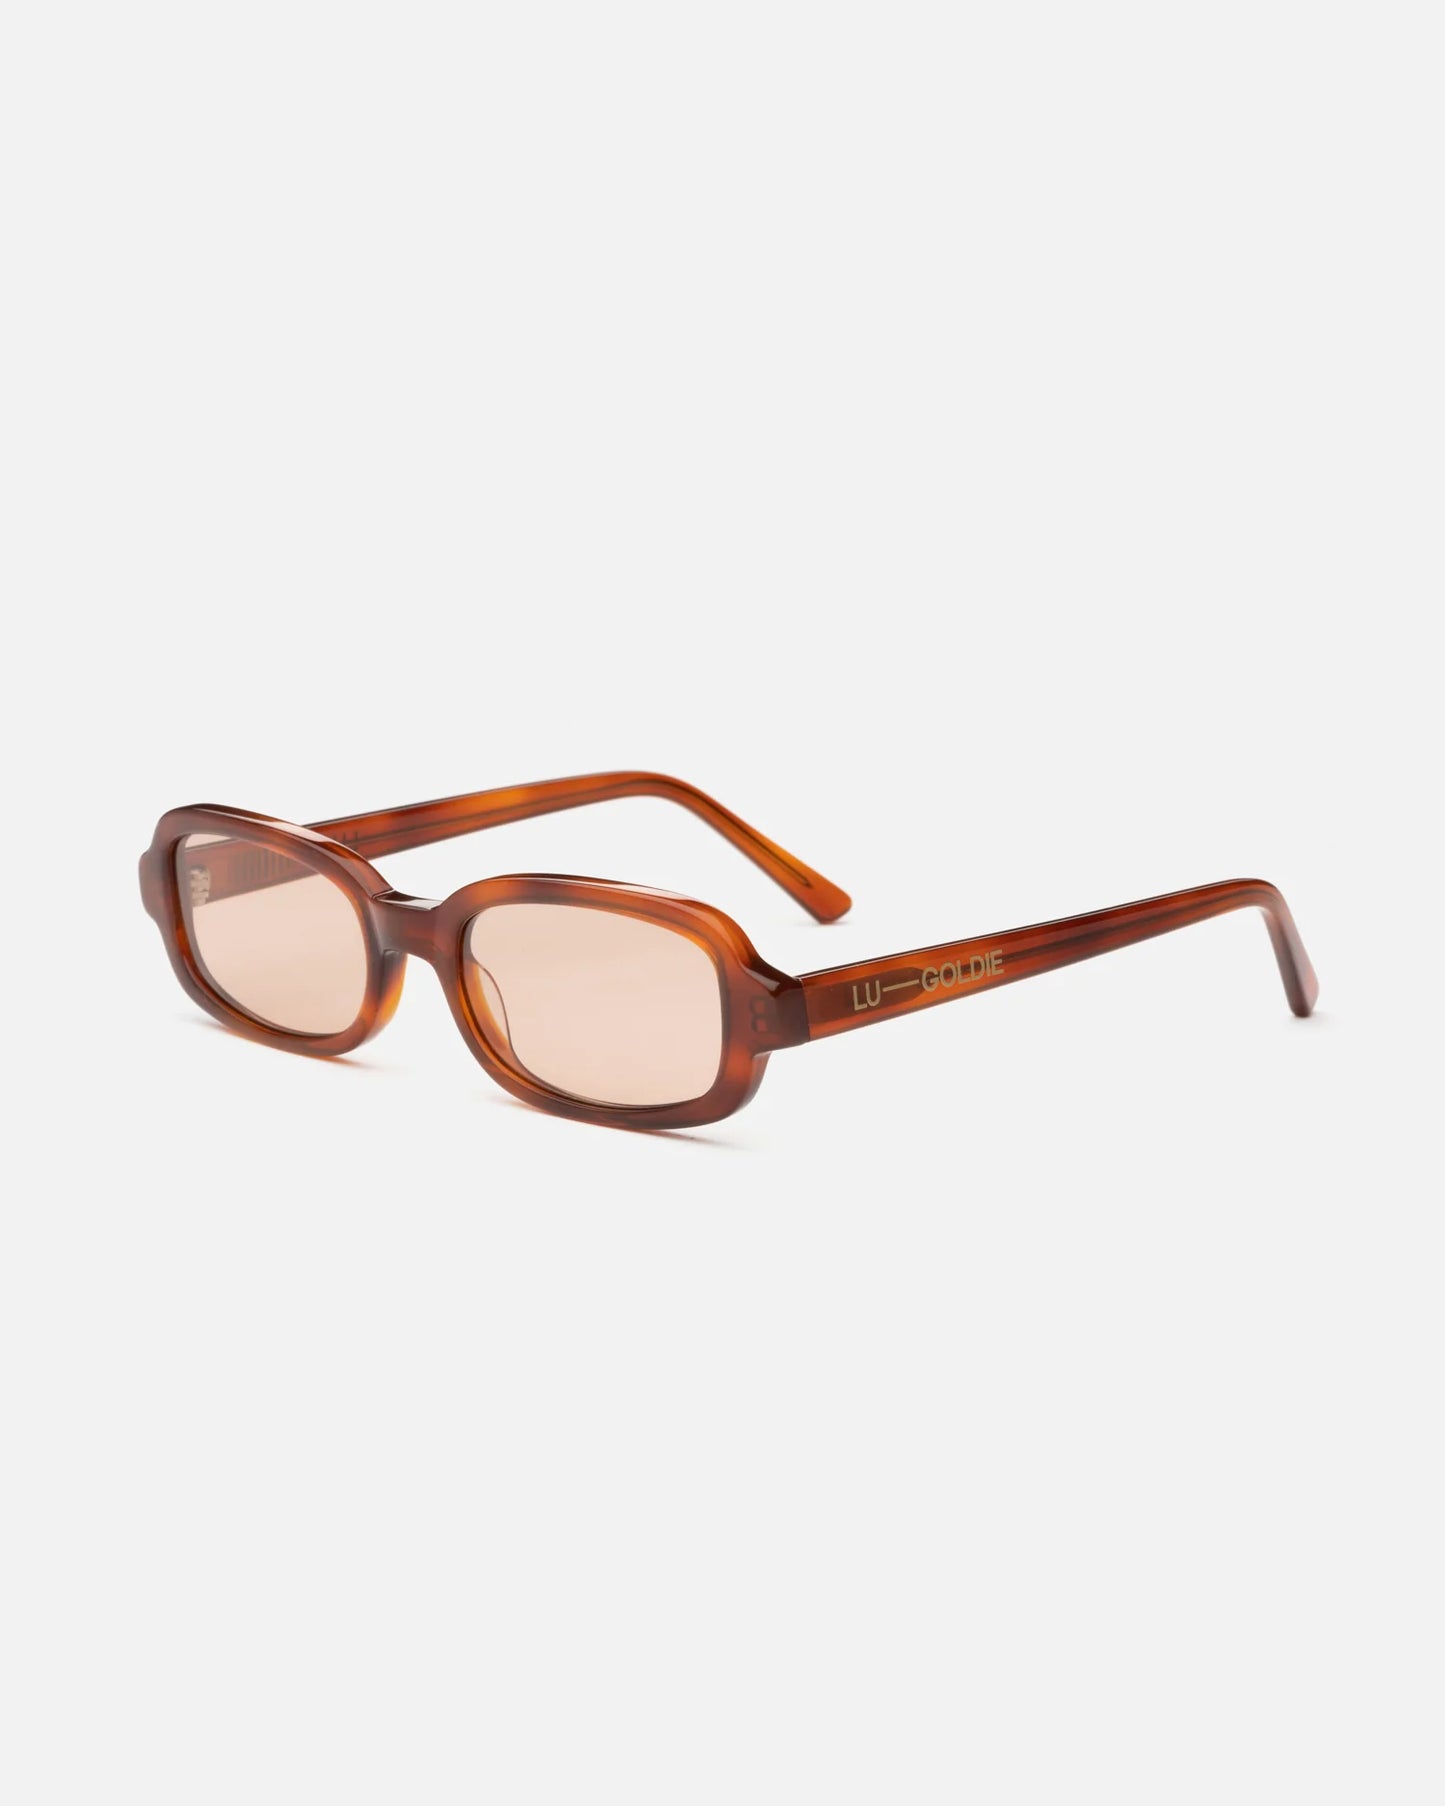 Martine - Chestnut Sunglasses